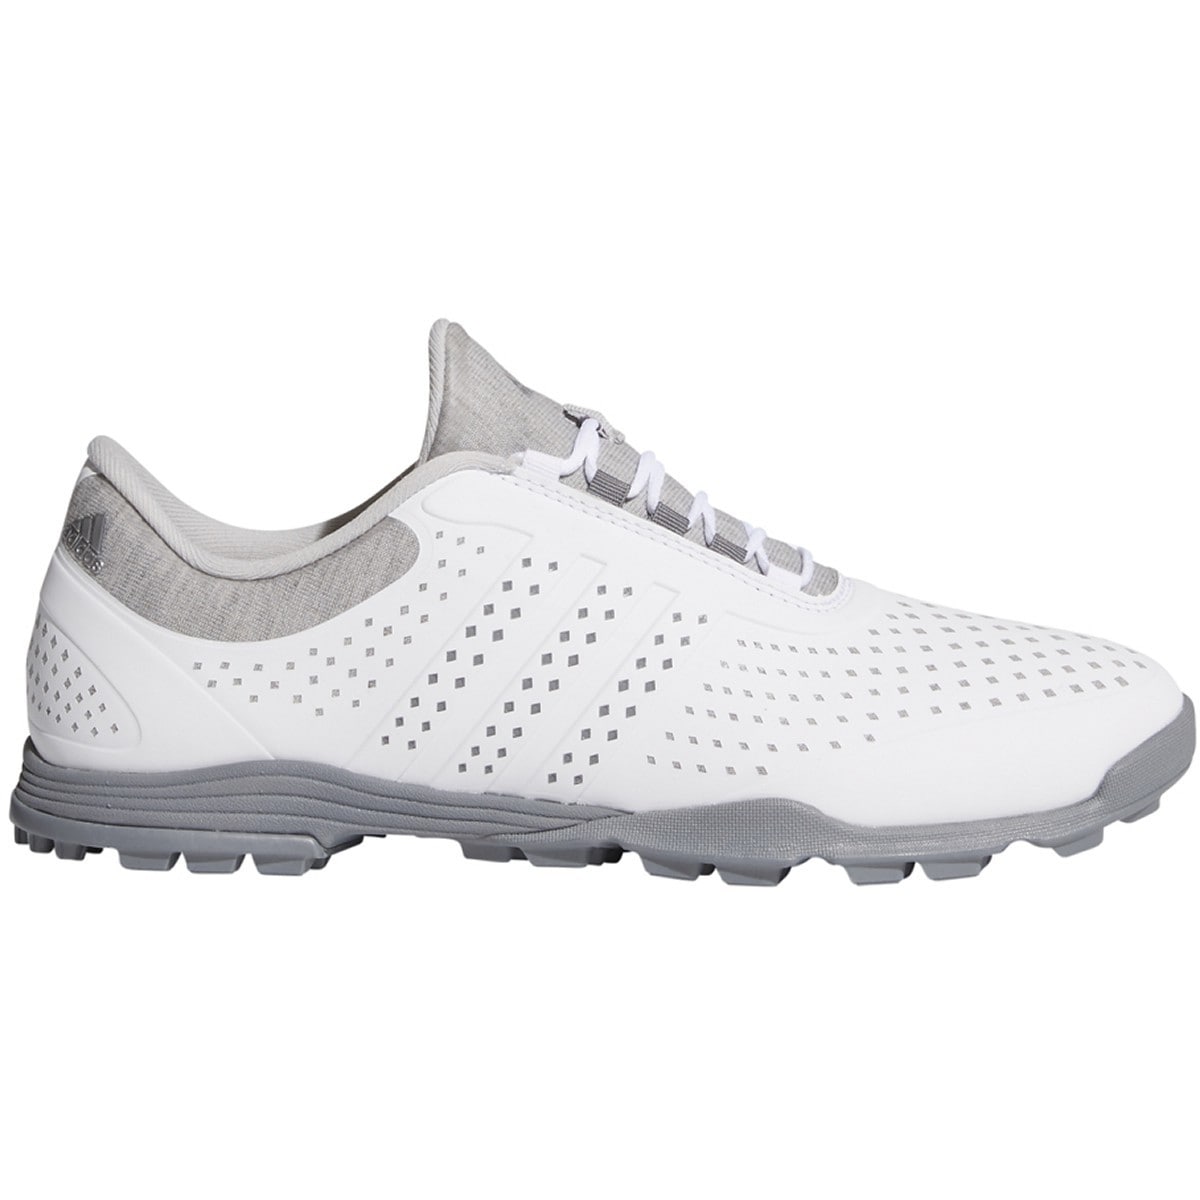 adidas women's adipure sport golf shoe